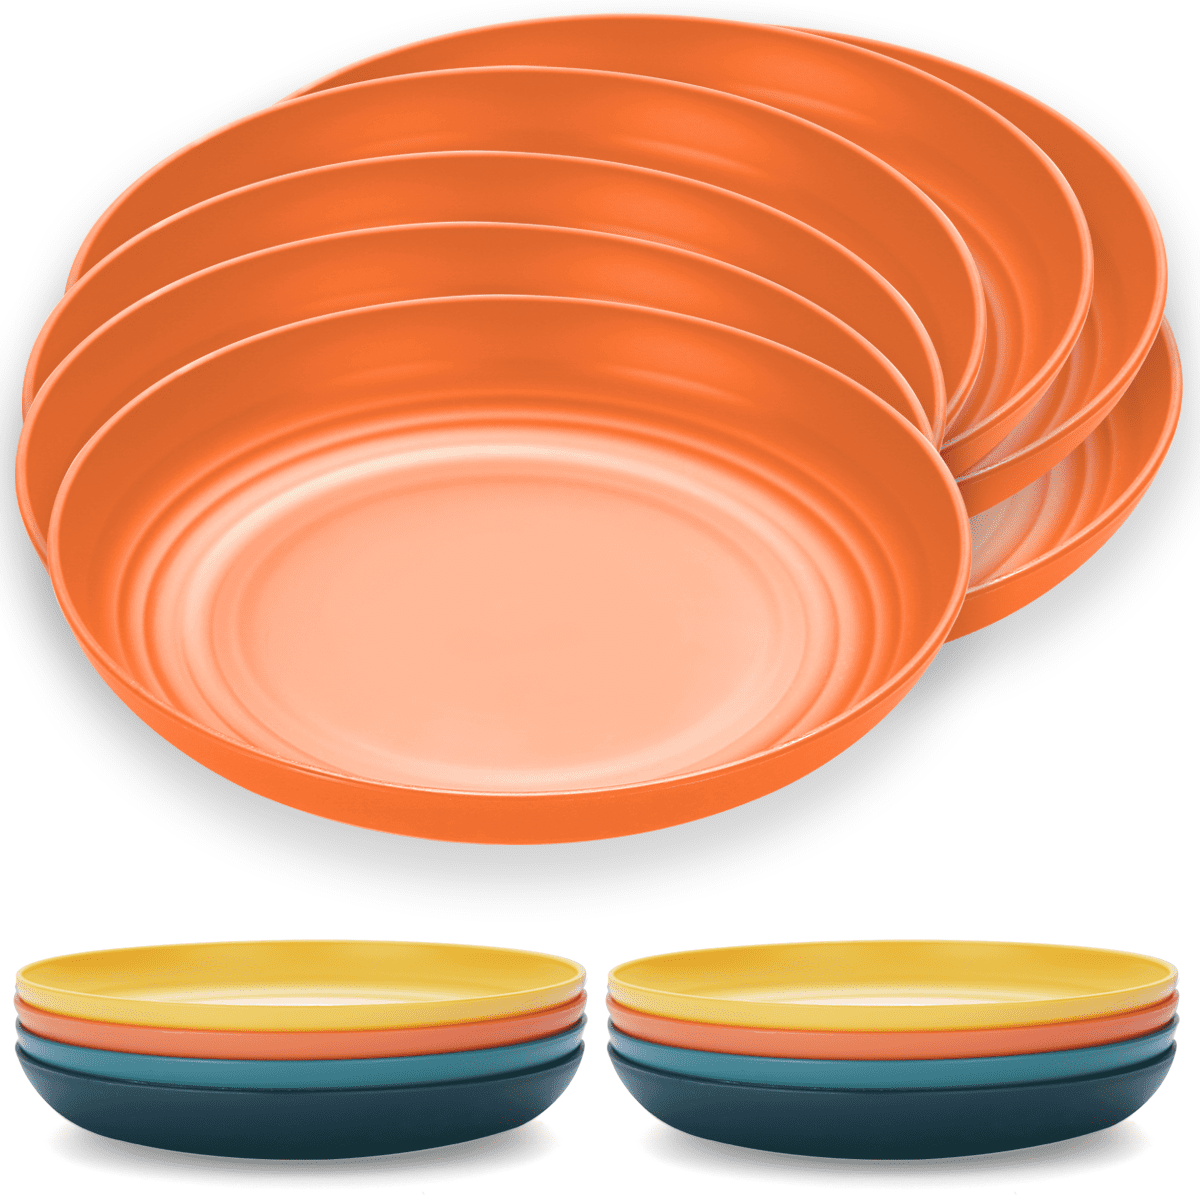 US$ 18.99 - 10 Inch Orange Plastic Plates 8 Pieces, Unbreakable